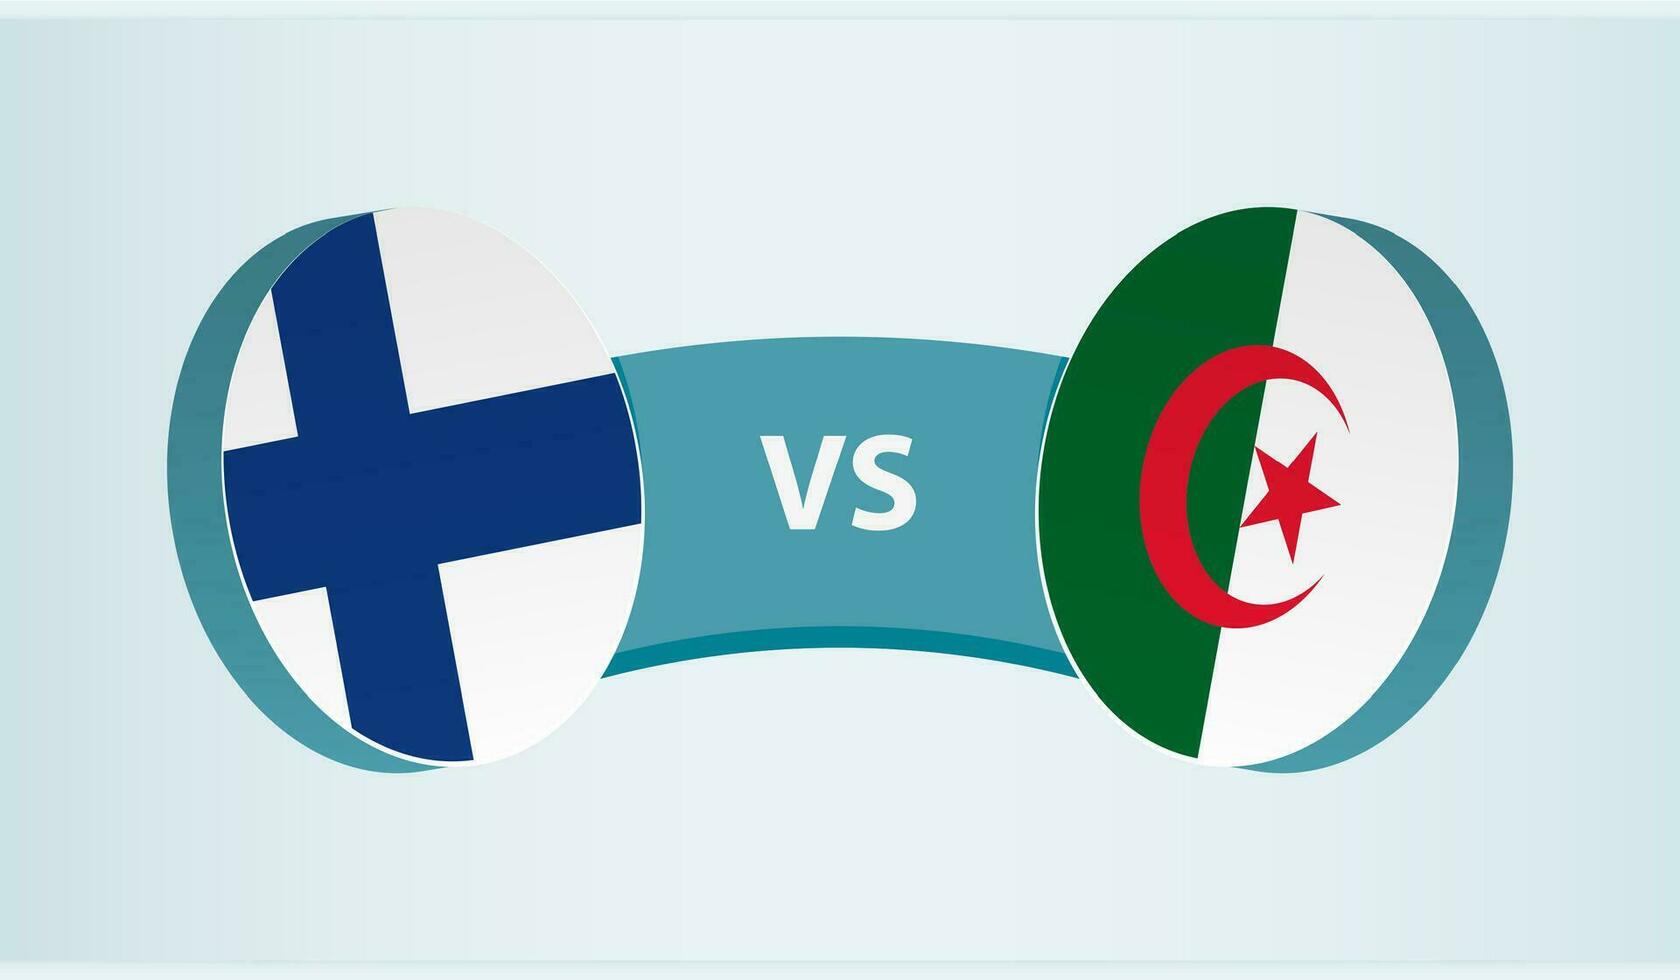 finland mot Algeriet, team sporter konkurrens begrepp. vektor